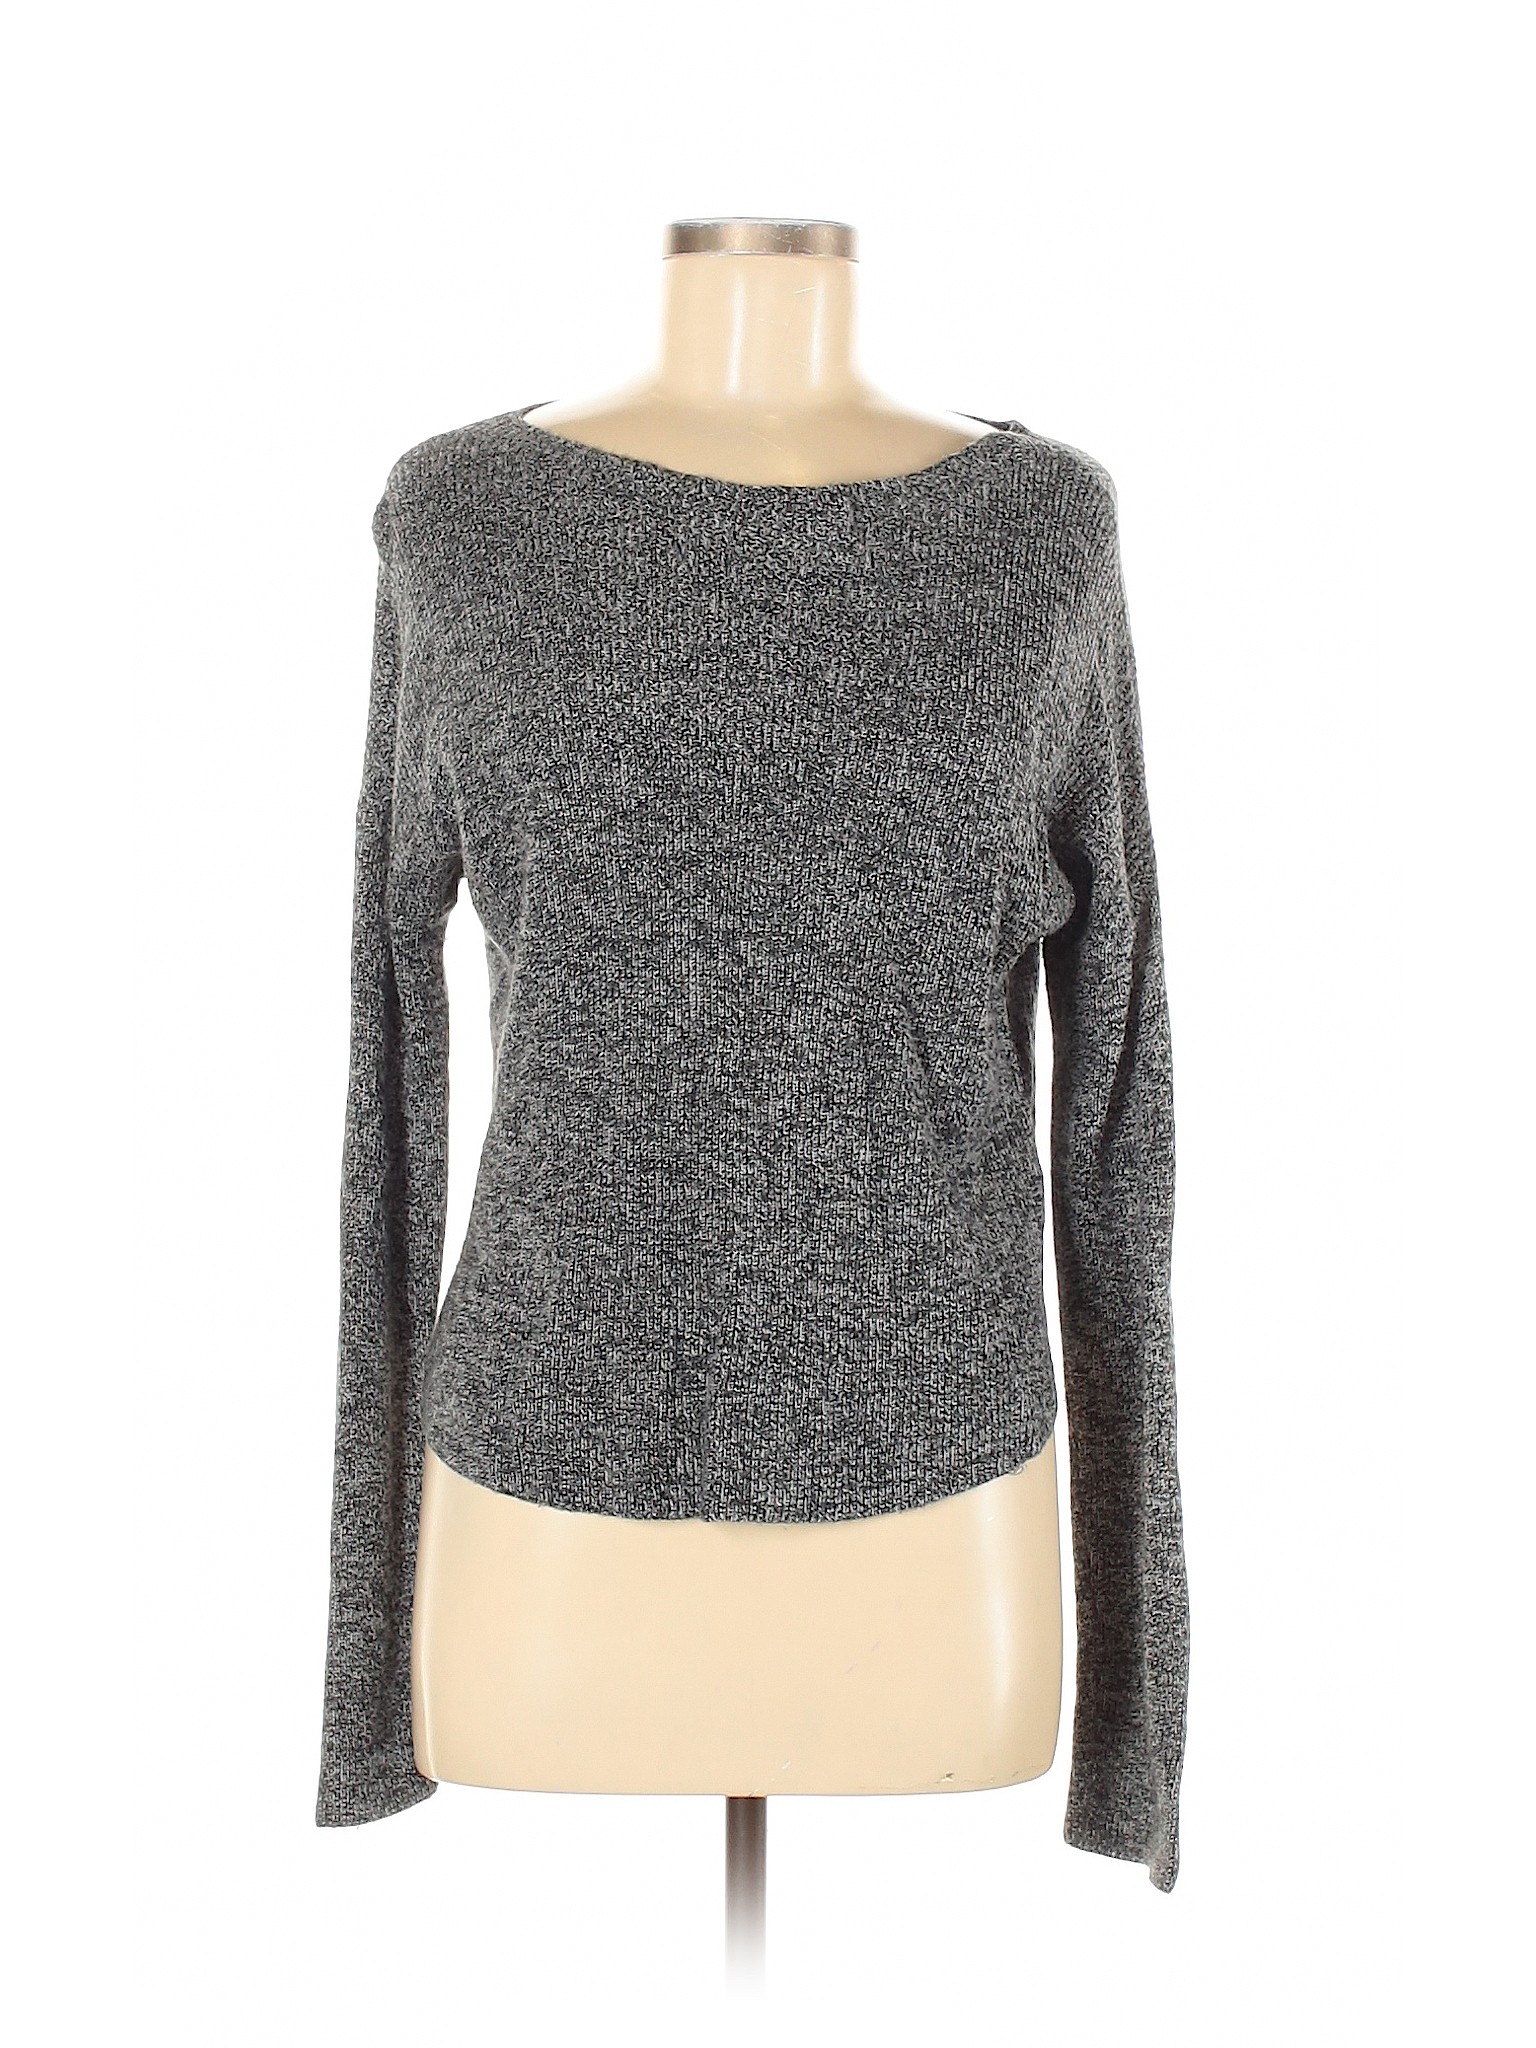 Express Women Gray Pullover Sweater M | eBay